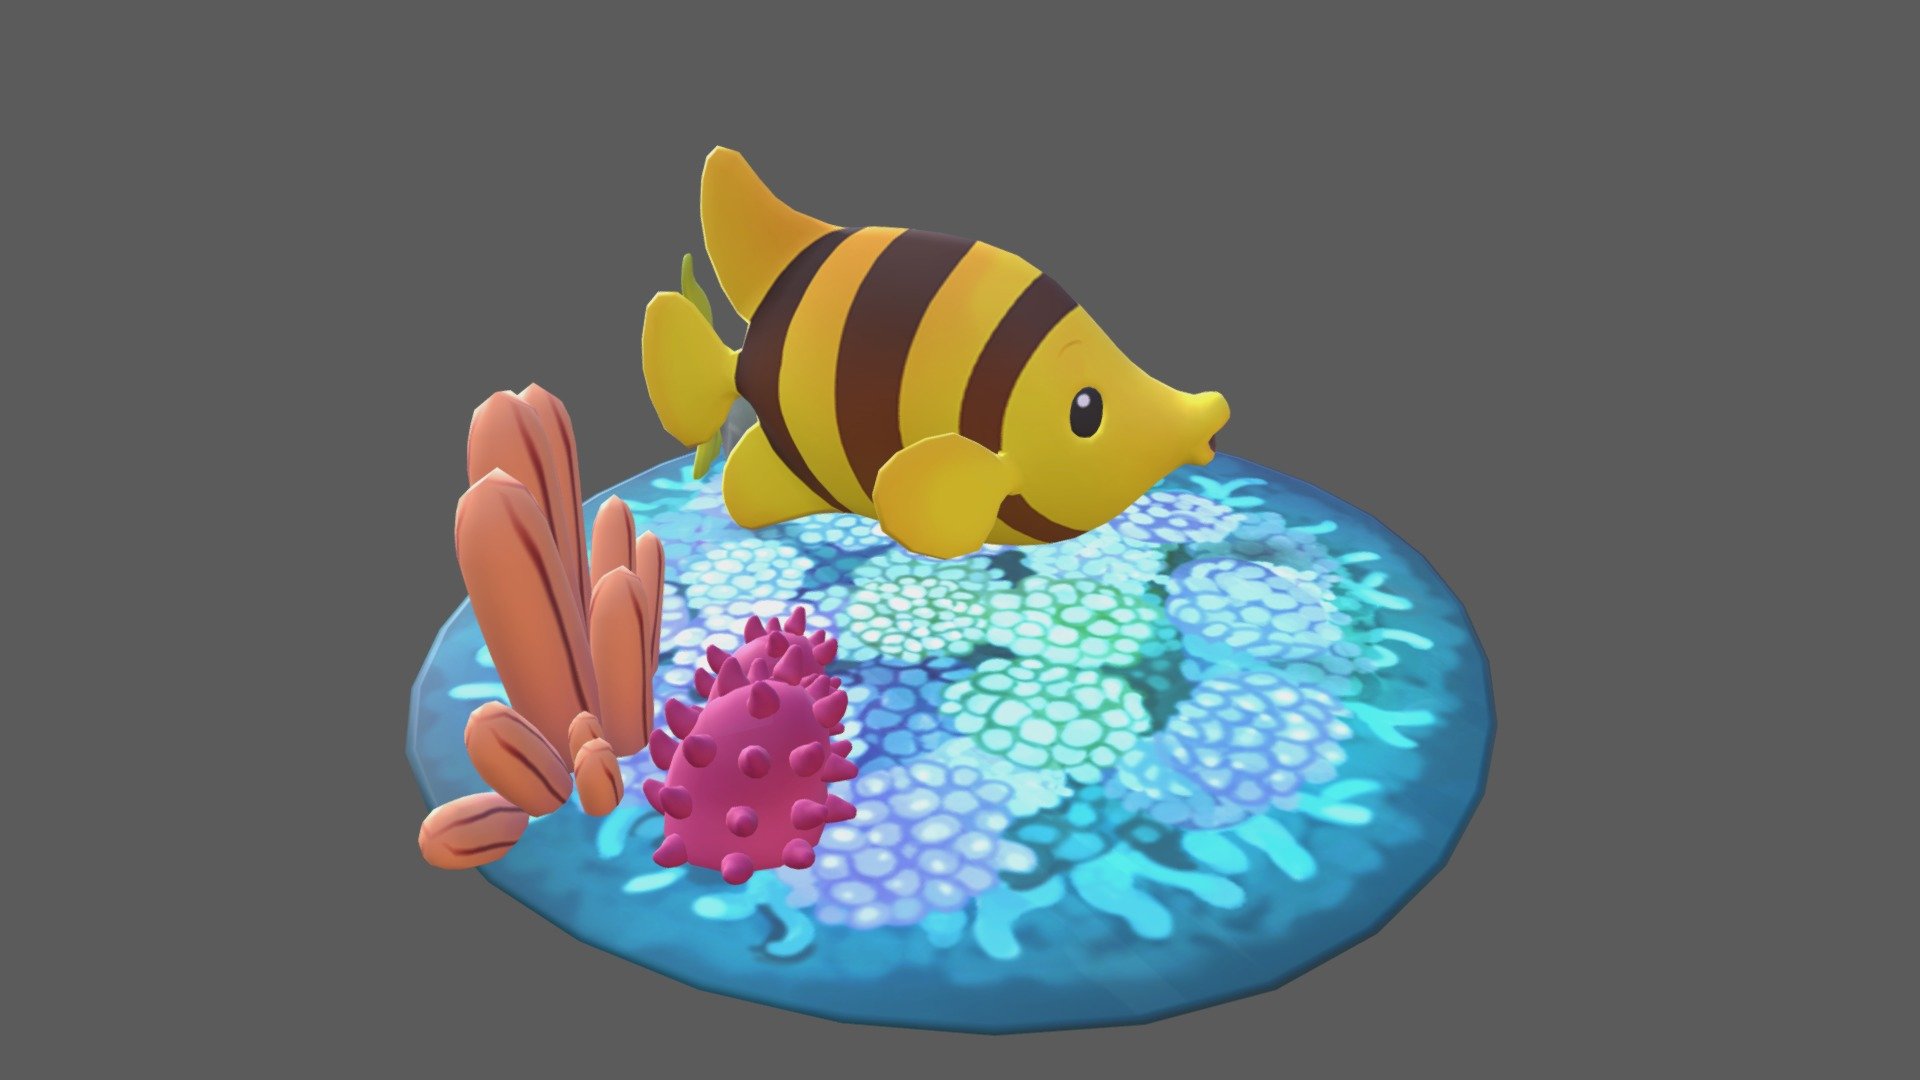 under the sea 3 - 3D model by 3dmonster 3d model